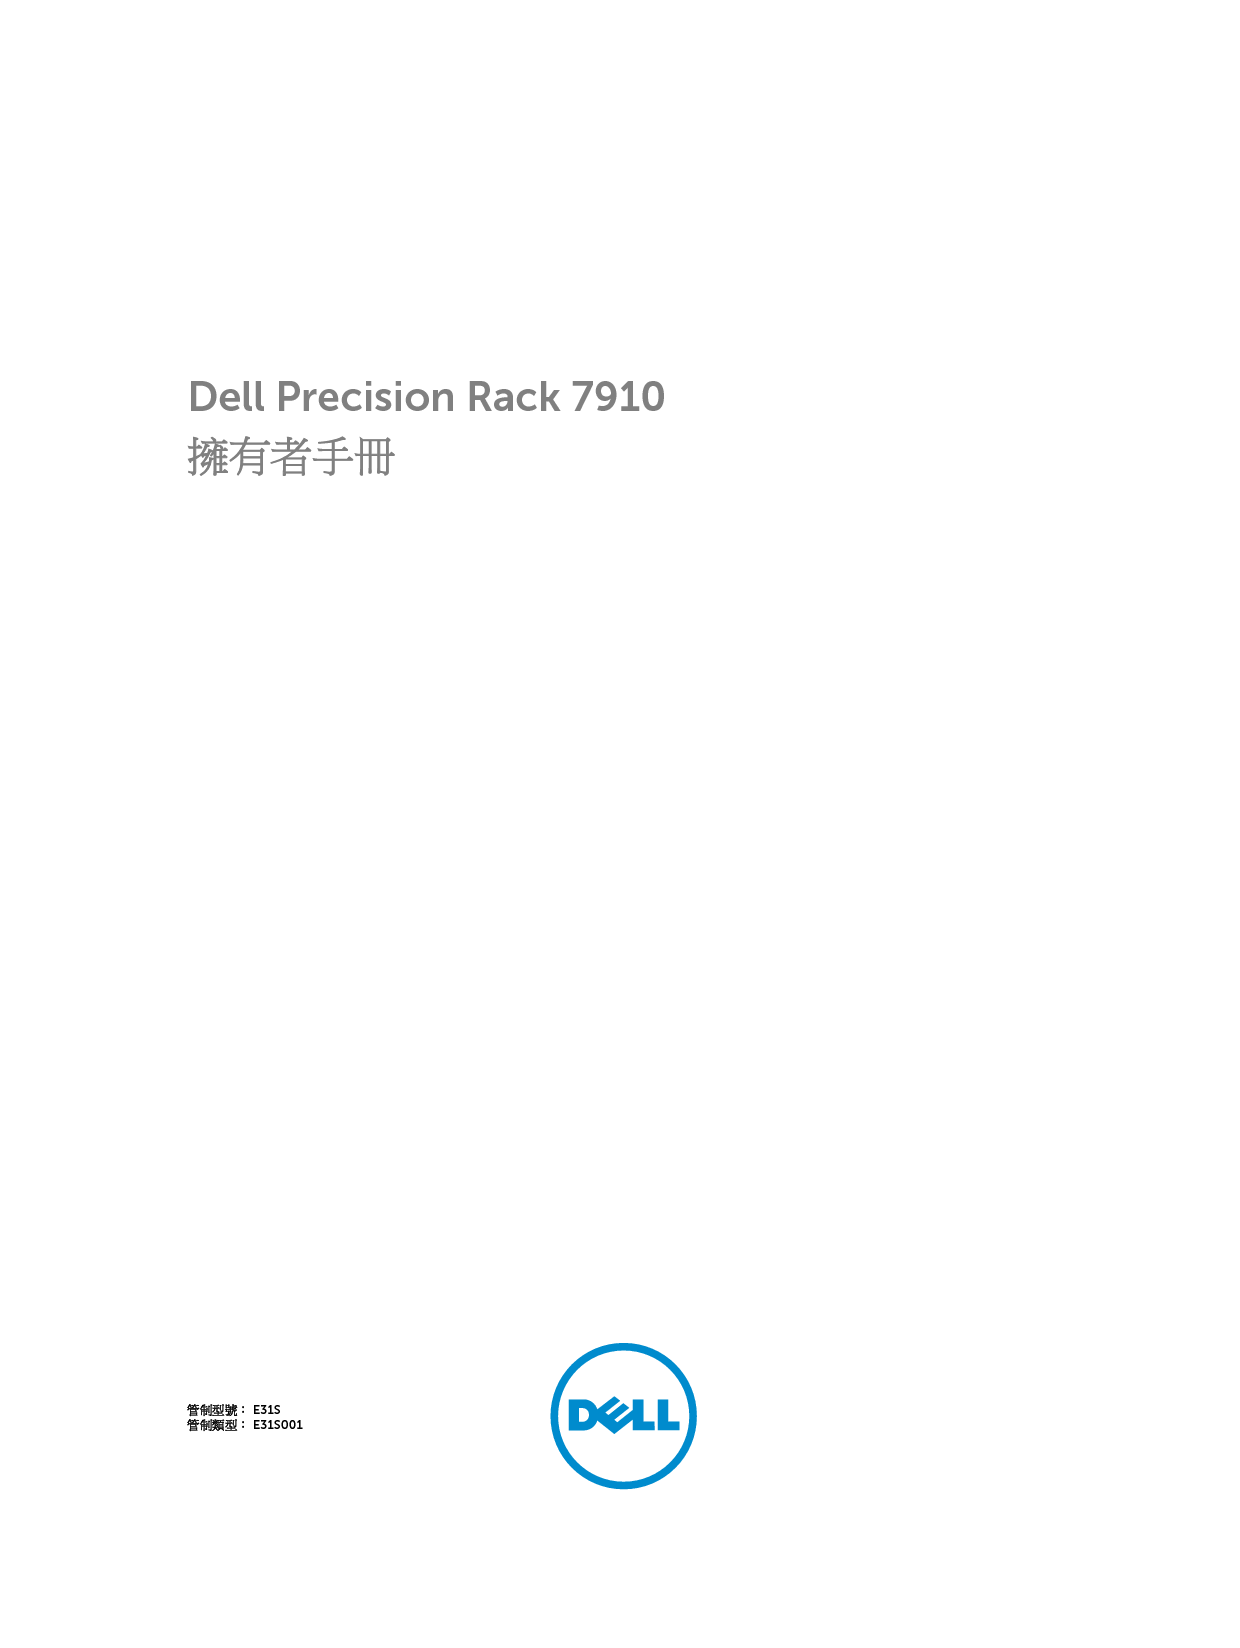 戴尔 Dell Precision R7910 繁体 用户手册 封面